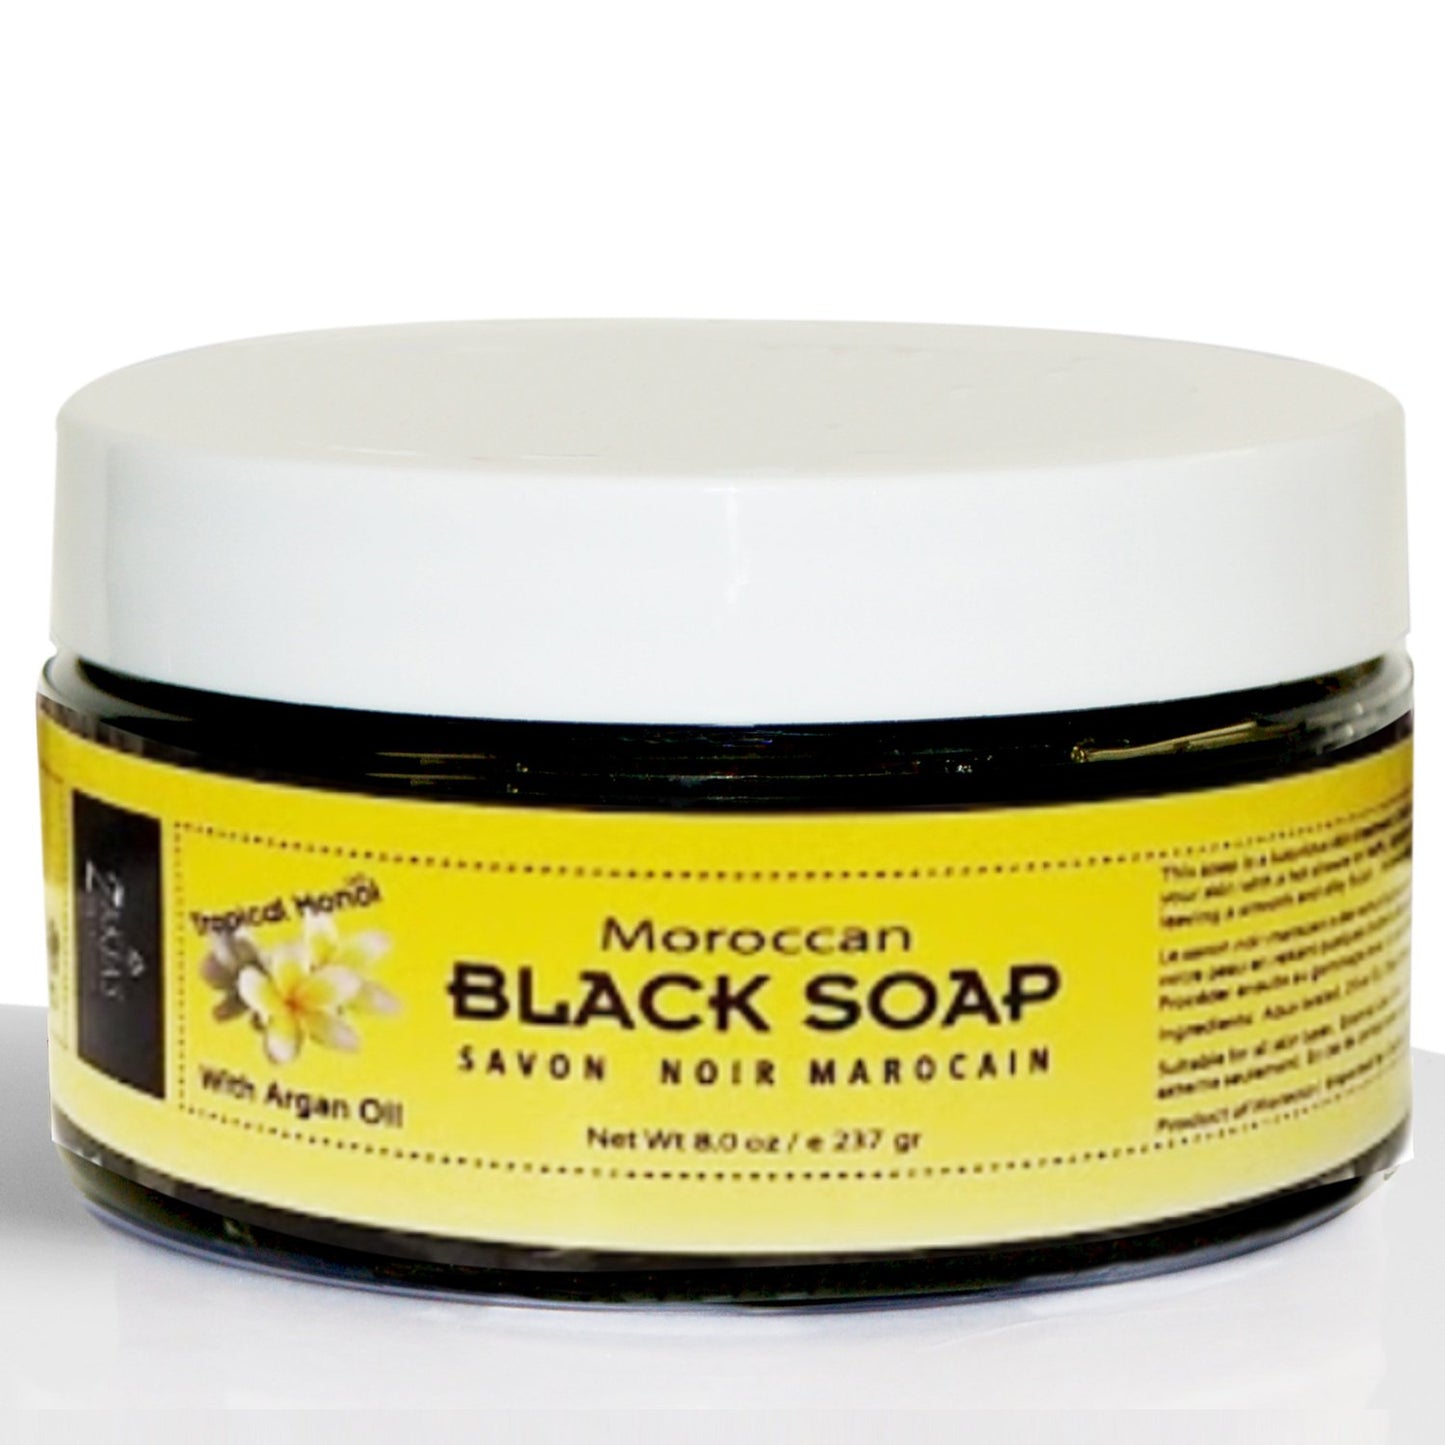 Moroccan Black Soap Exfoliating Kessa Gift Box - Monoi